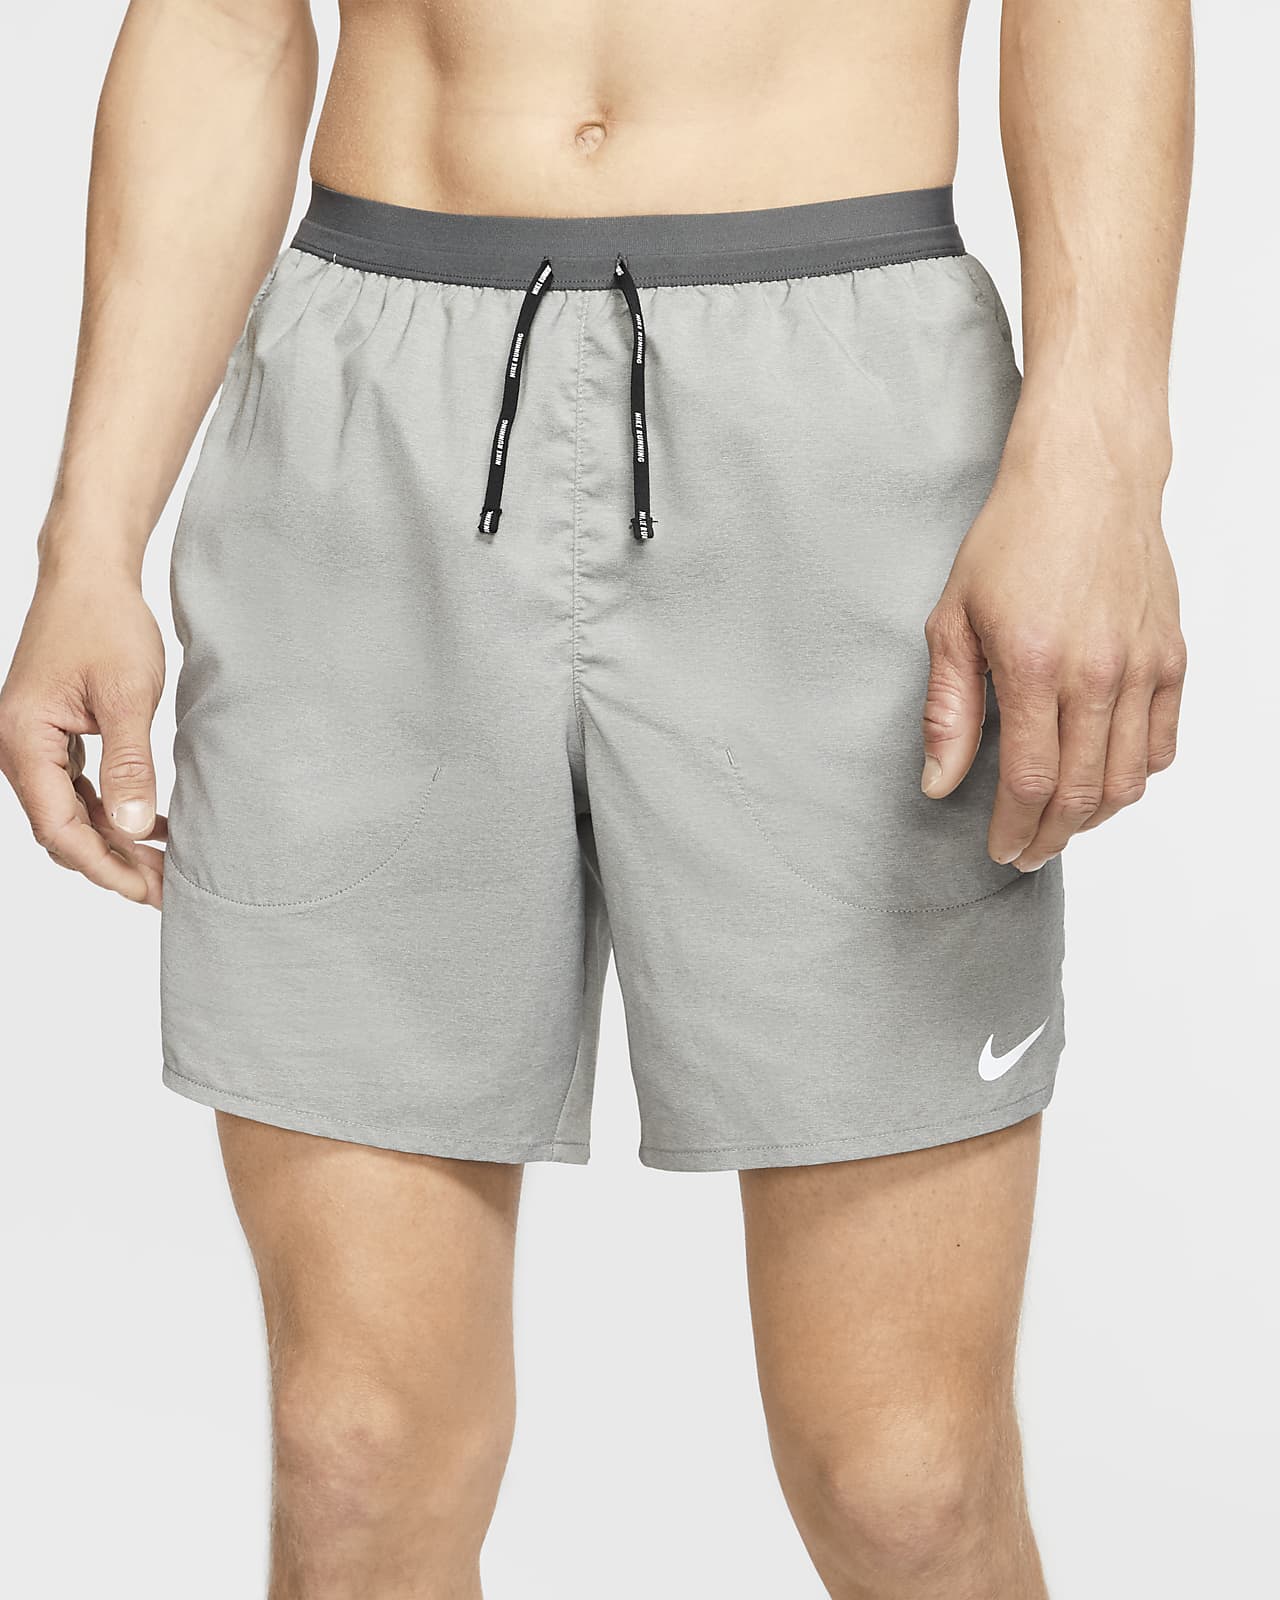 men's flex stride running shorts